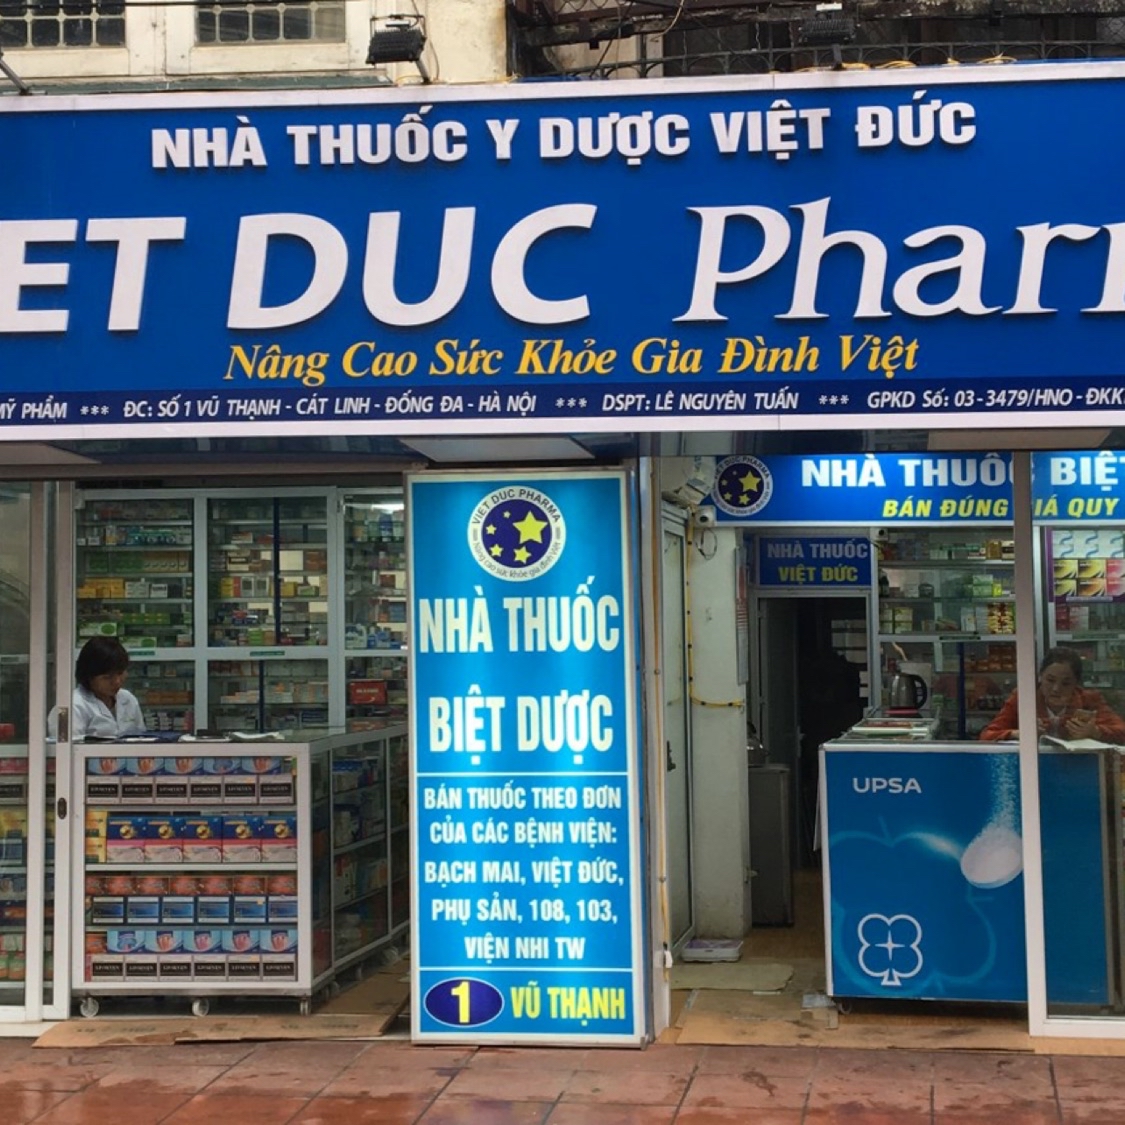 Viet Duc Pharma